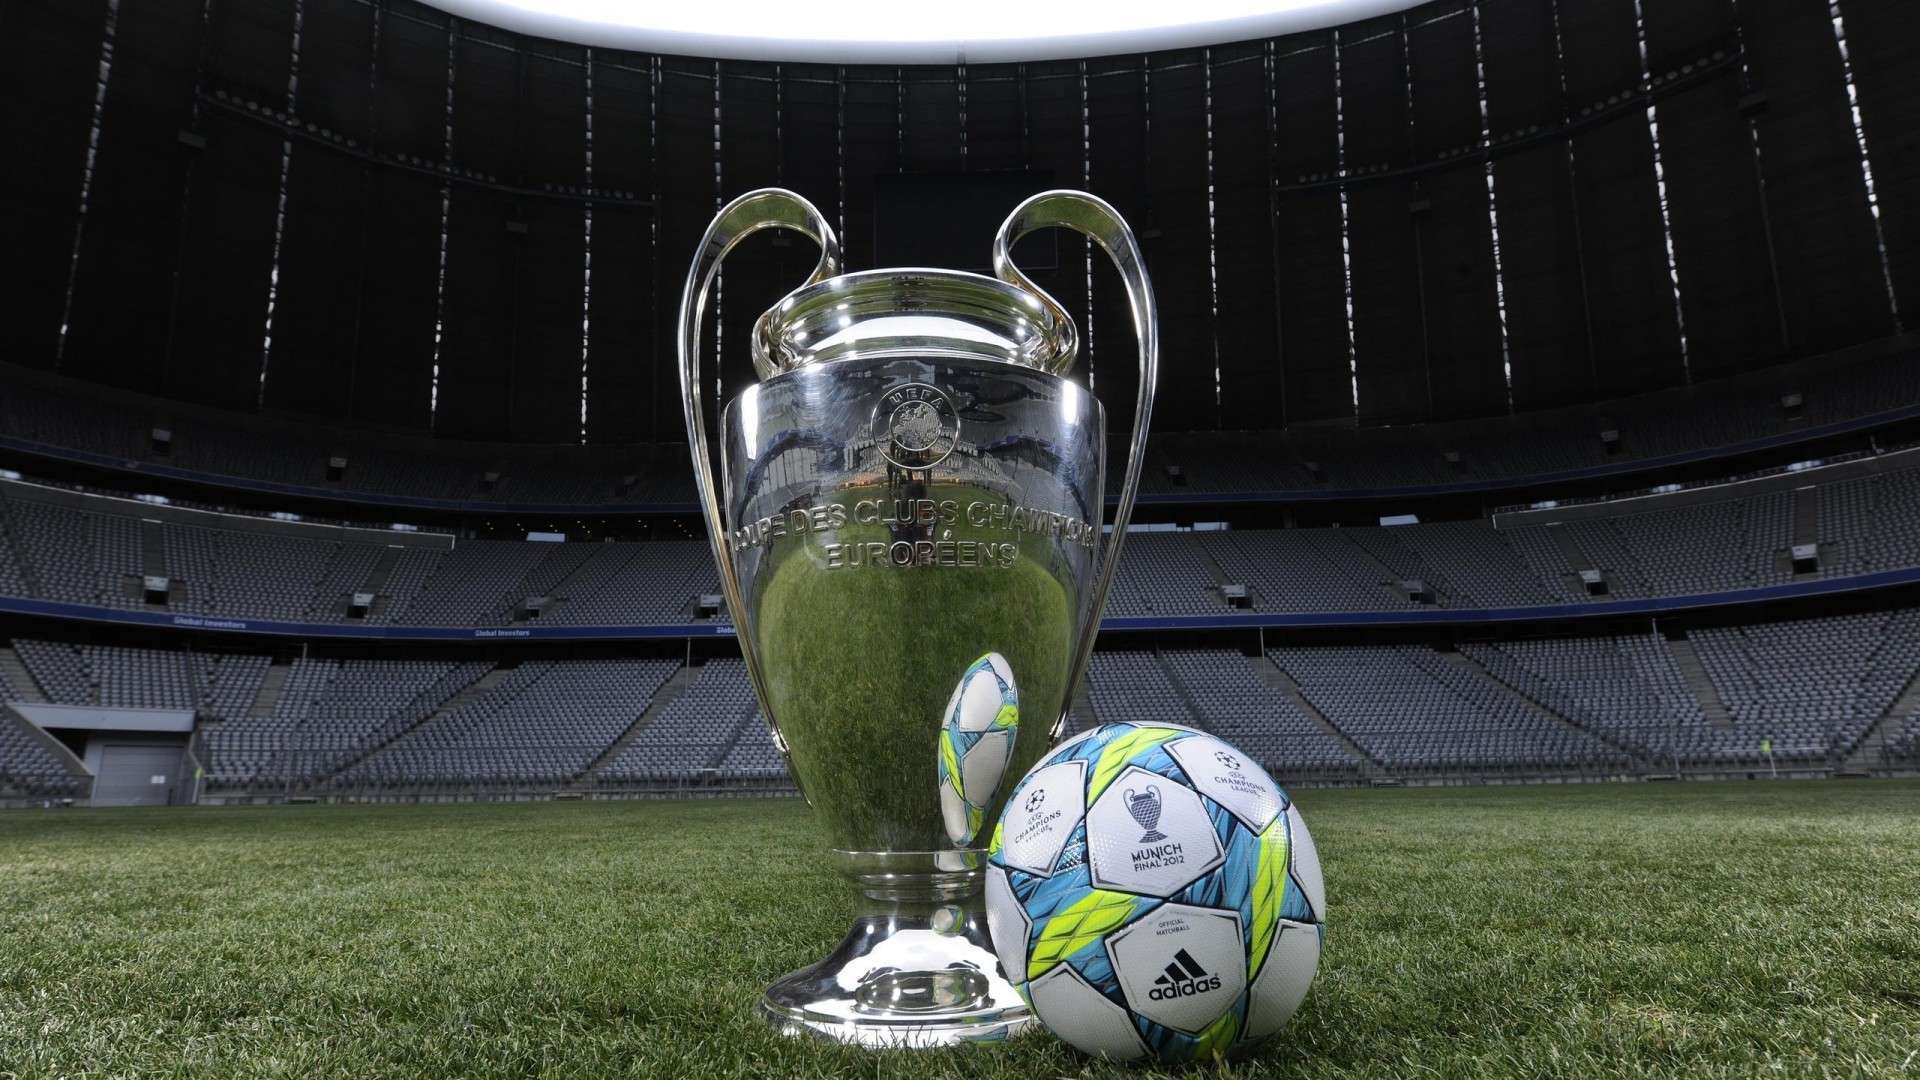 Uefa Champions League 2014 Trophy Desktop Wallpaper Download